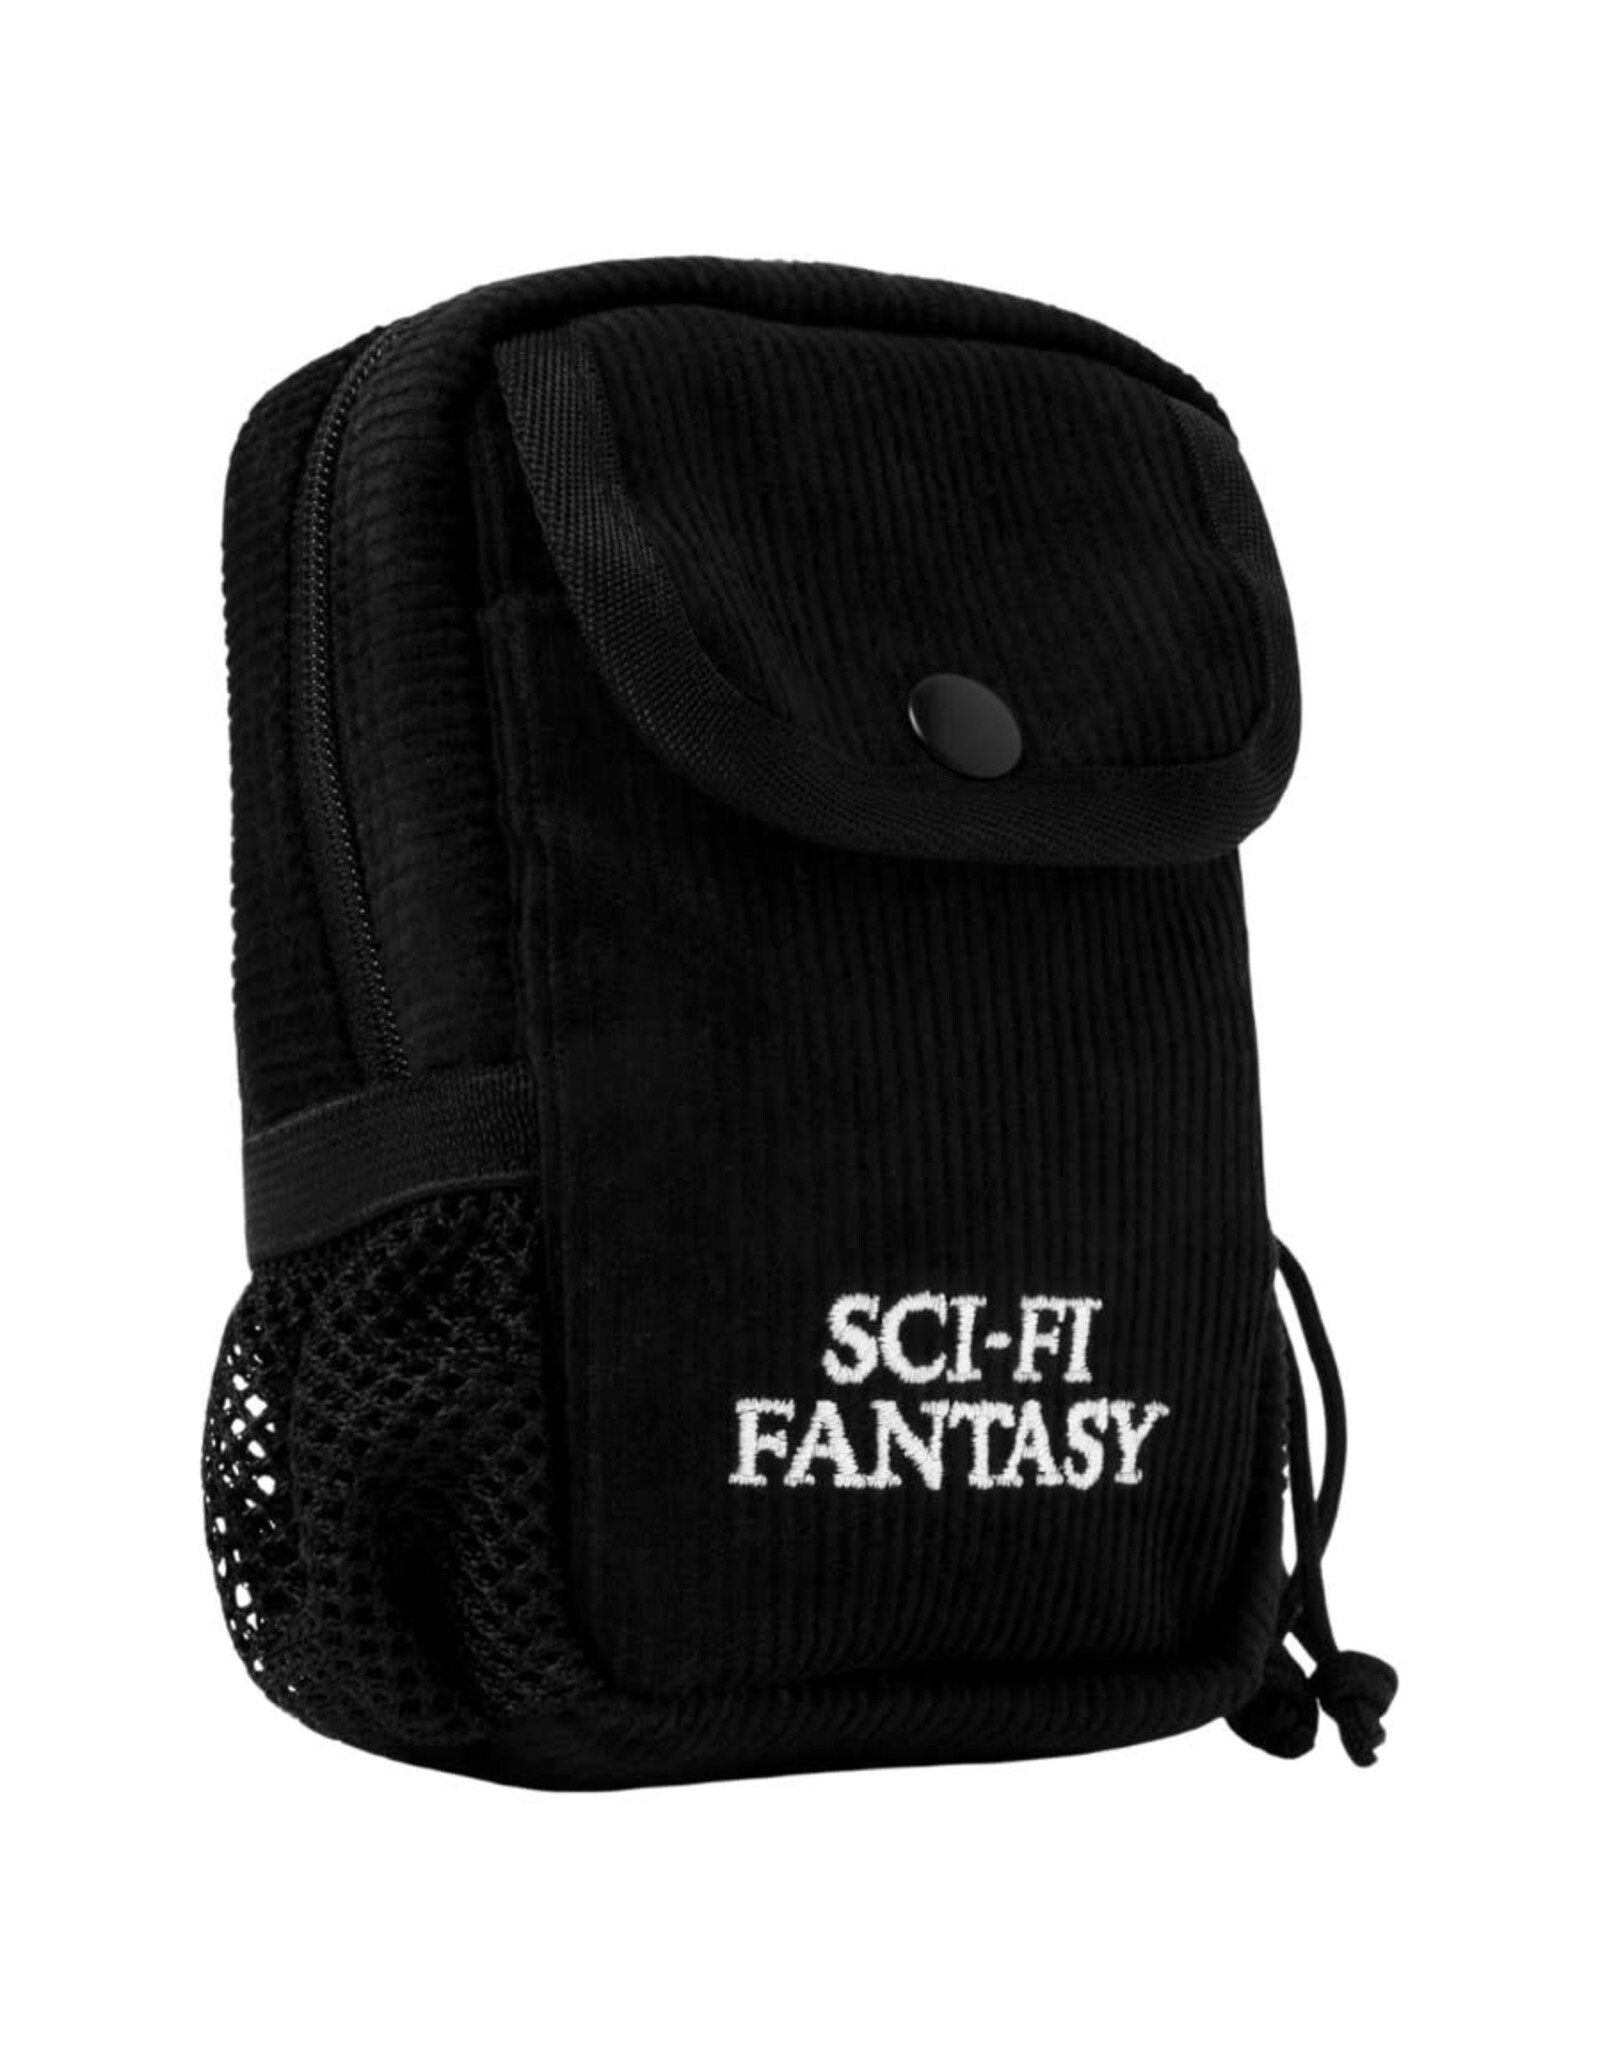 Sci-Fi Fantasy Sci-Fi Fantasy Bag Camera Pack (Black)